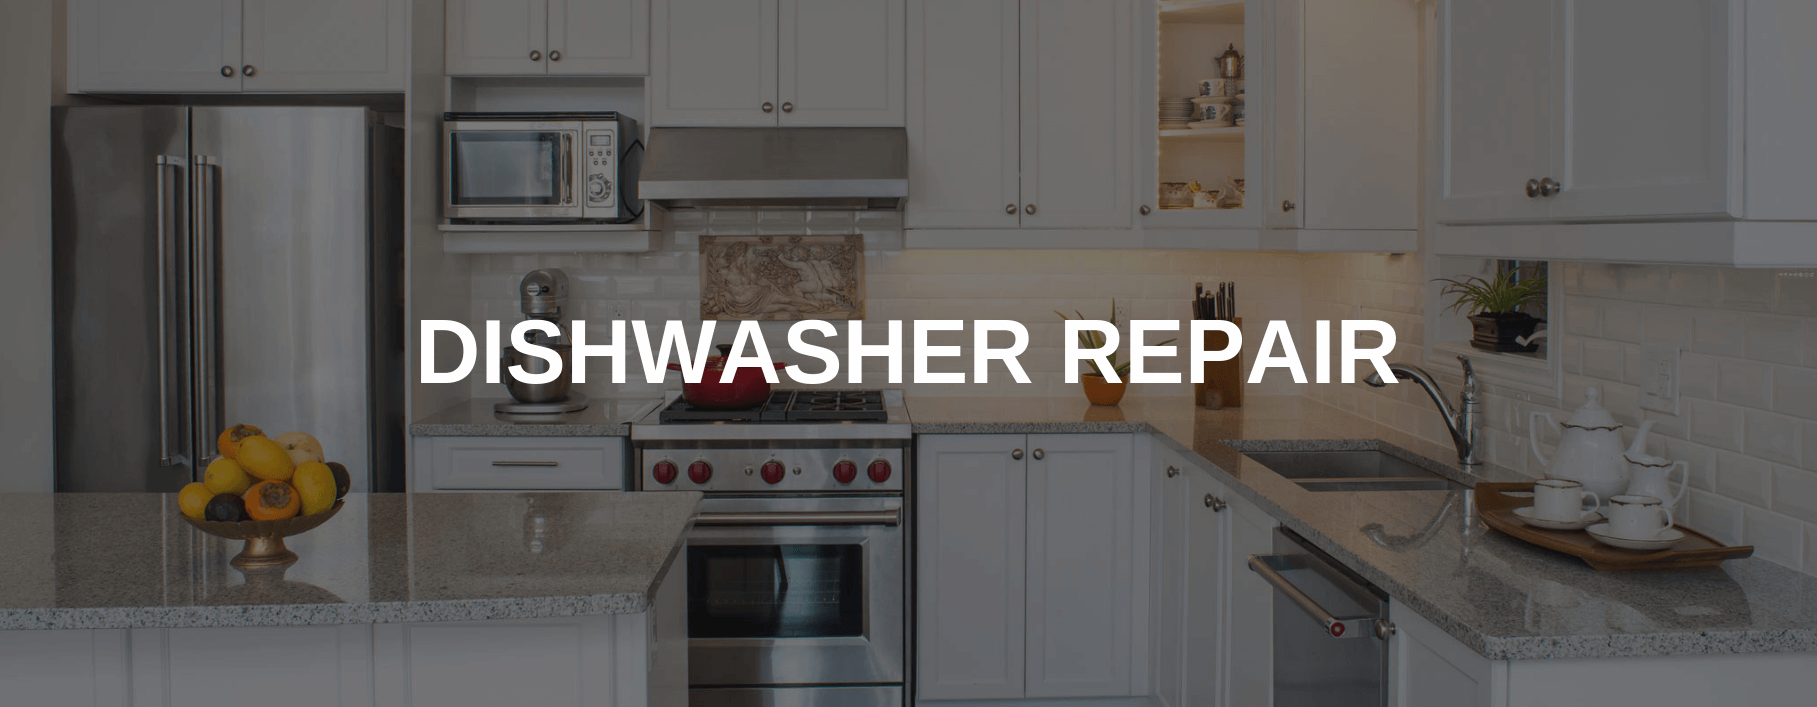 dishwasher repair philadelphia